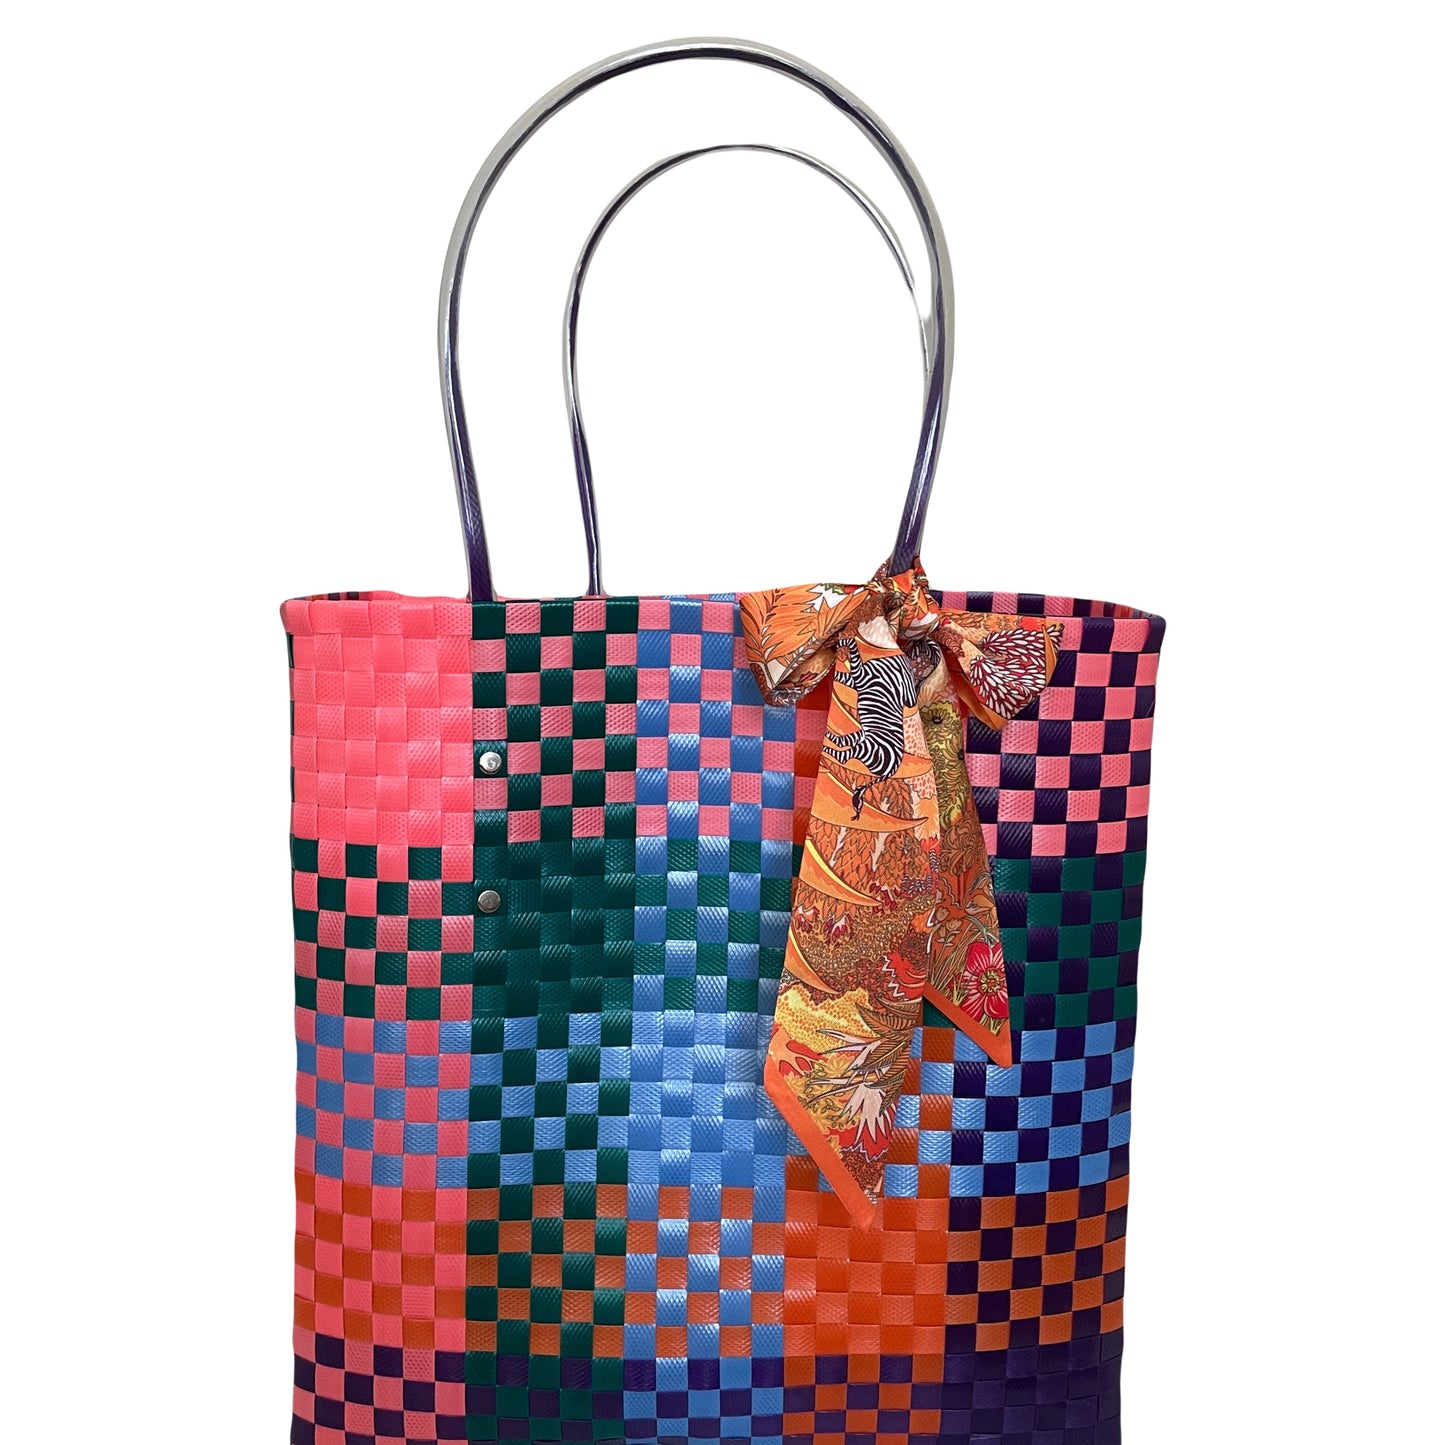 Zuncho bag pink, dark green, orange and blue